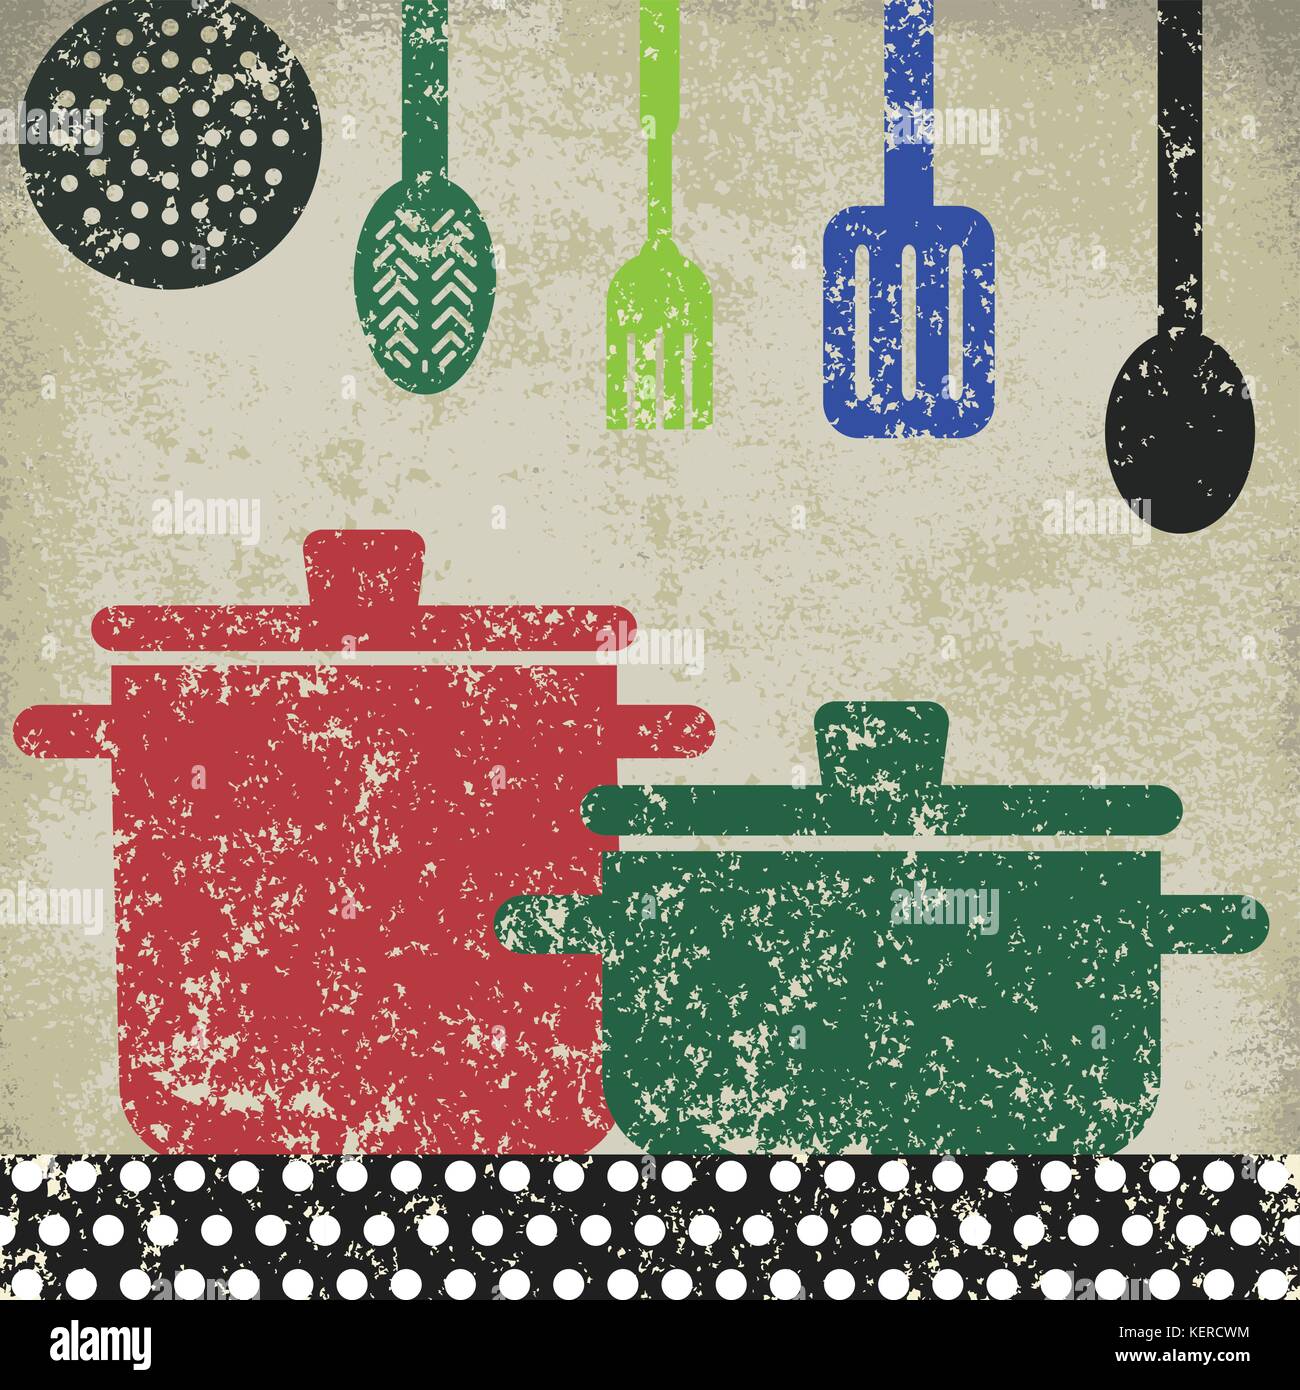 Vintage Poster mit Kochen verwandte Objekte Stock-Vektorgrafik - Alamy